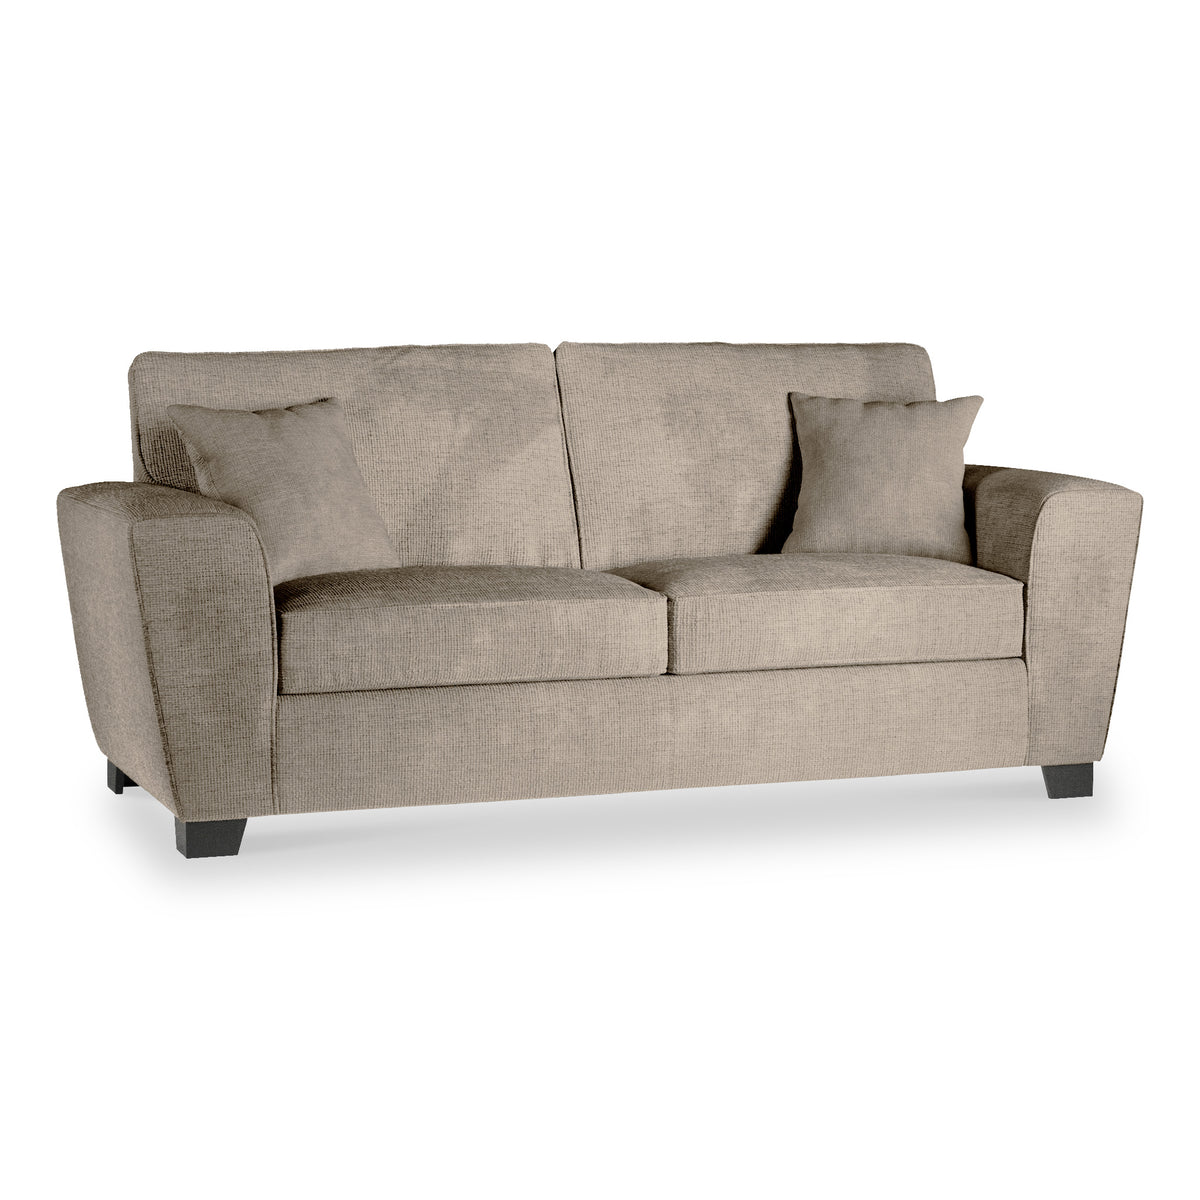 Chester Mocha Hopsack 3 Seater Sofa from Roseland Furniture